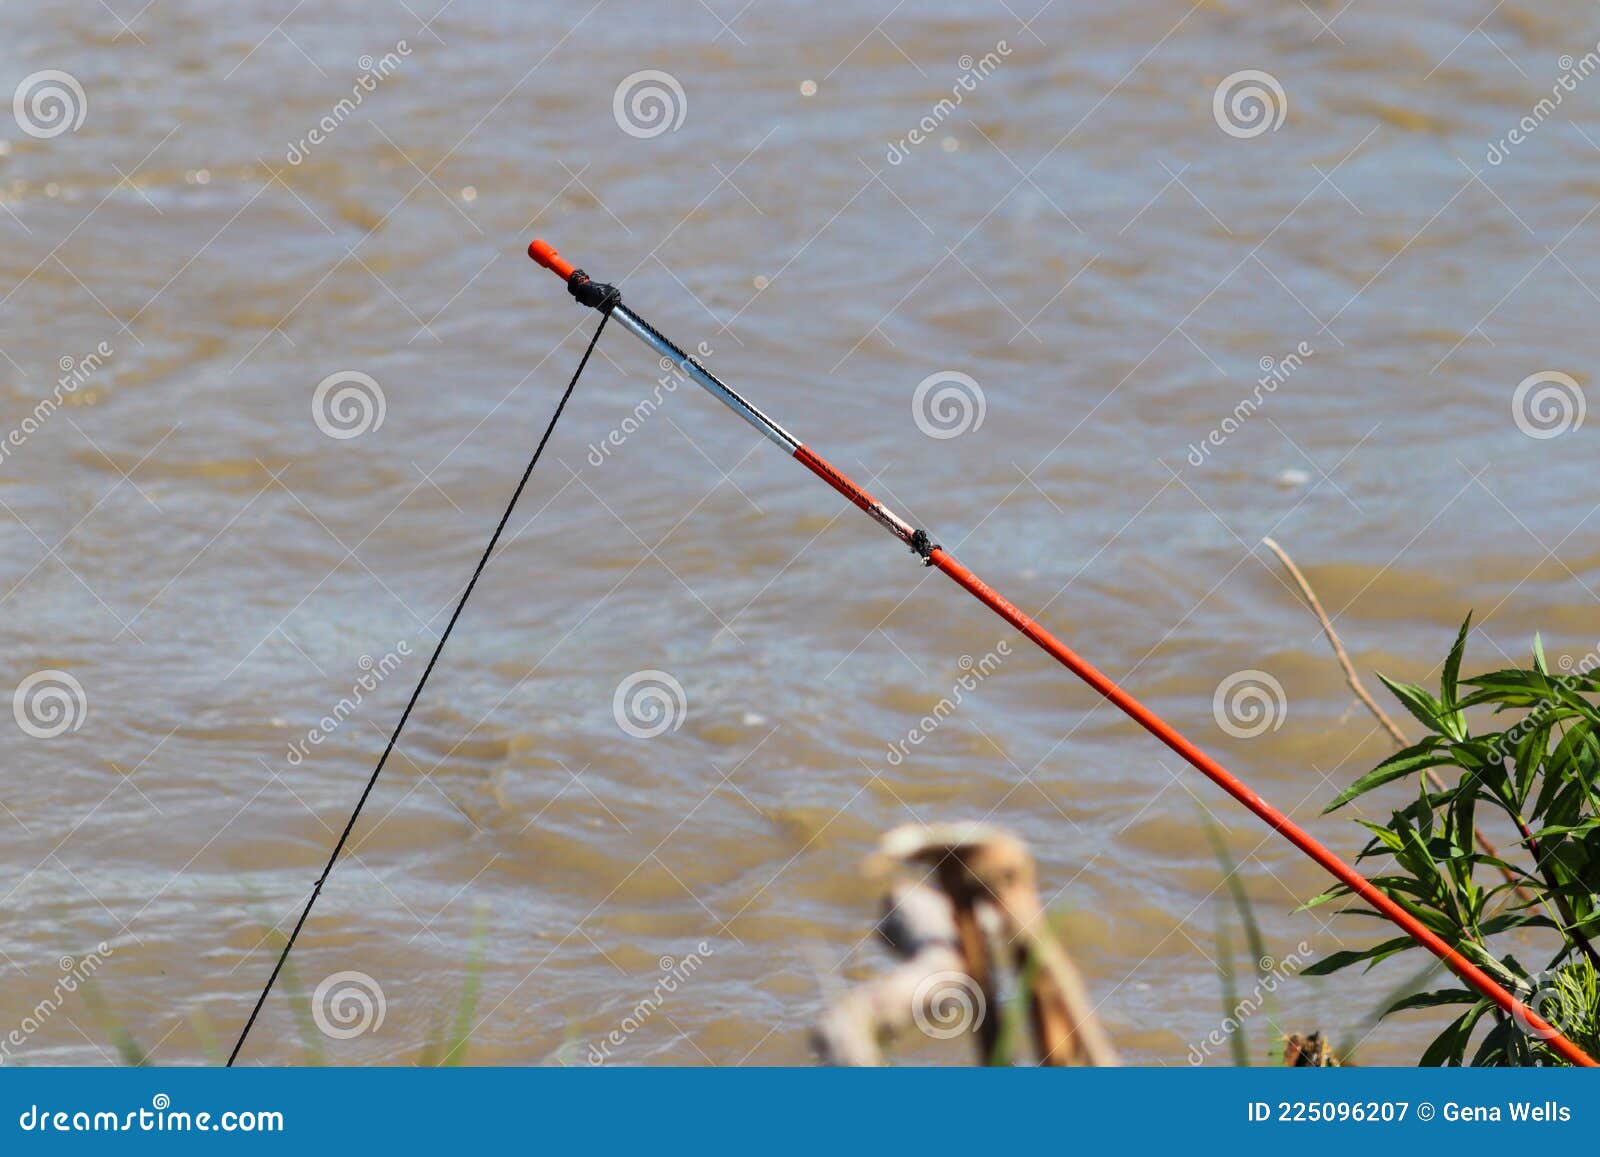 https://thumbs.dreamstime.com/z/catfish-set-line-fishing-alone-niobrara-river-nebraska-catfish-set-line-fishing-alone-niobrara-river-225096207.jpg